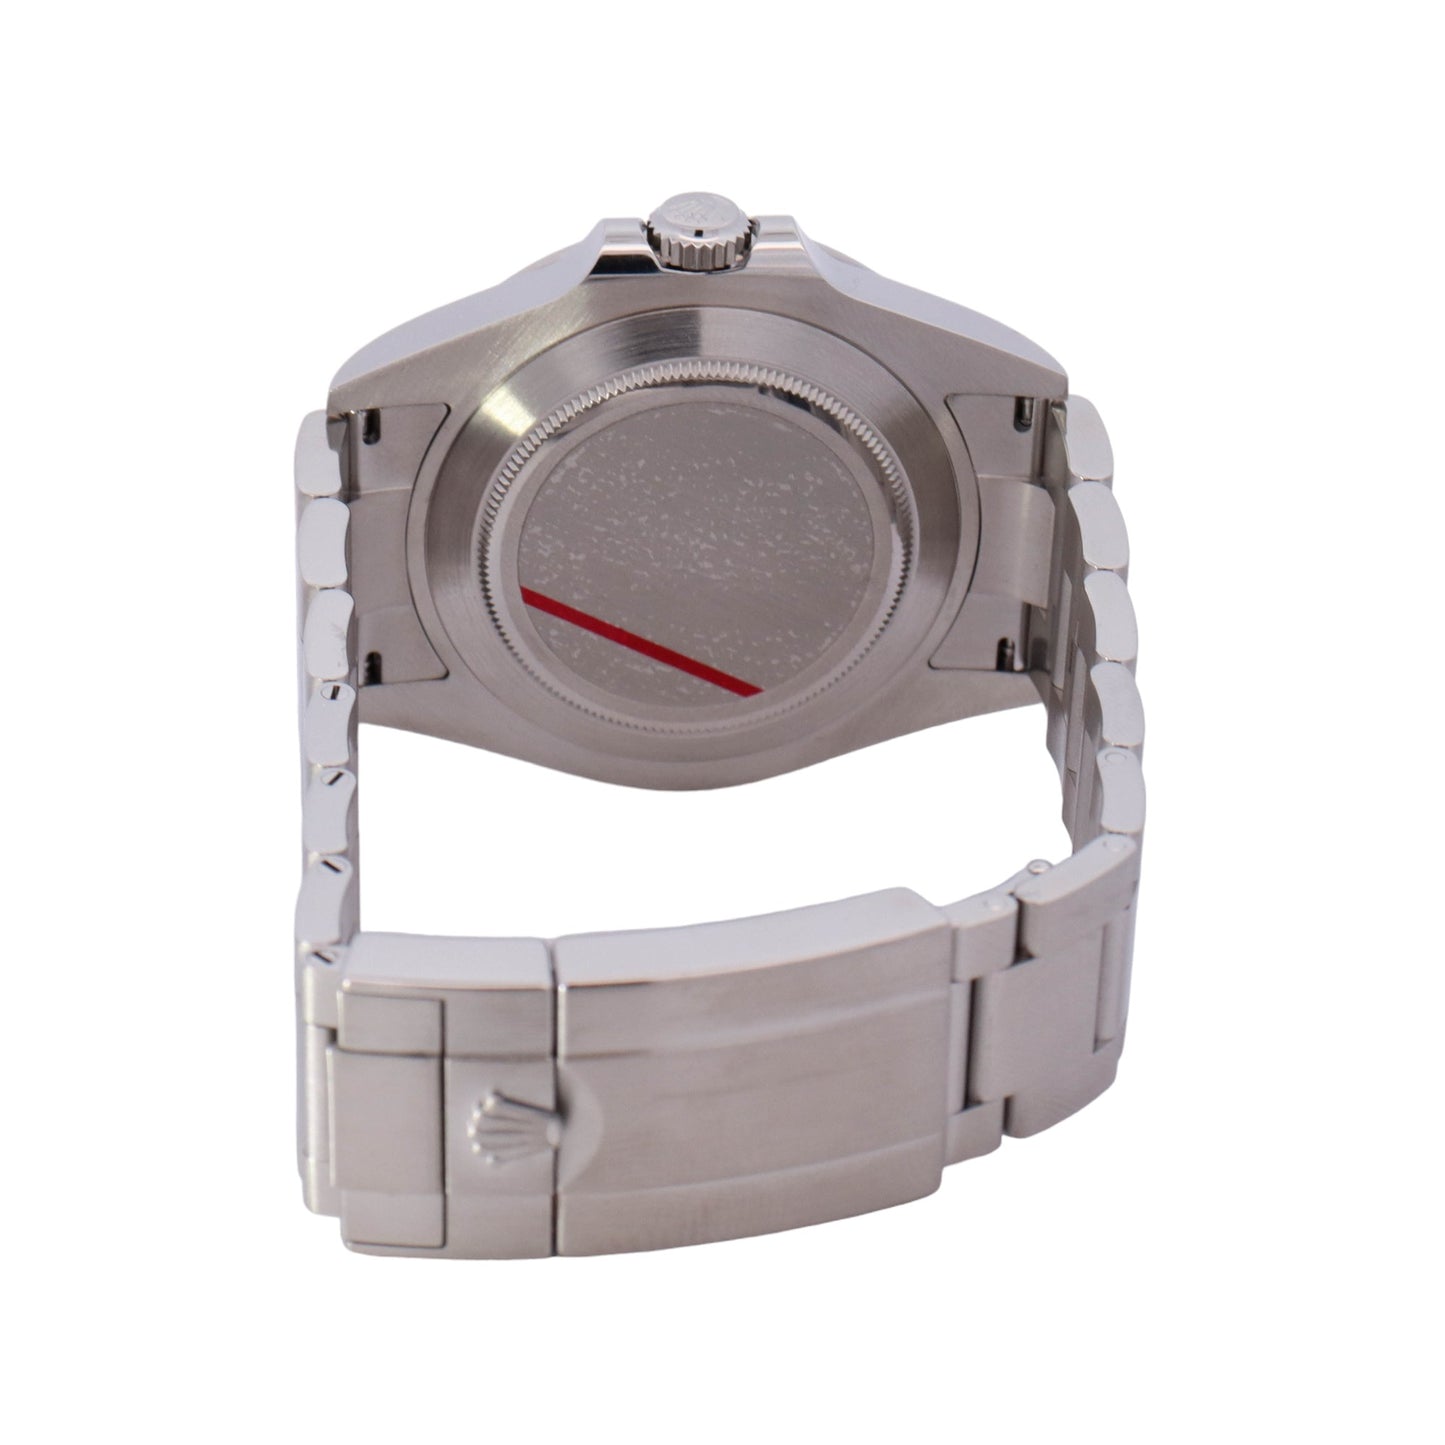 Rolex Explorer II Stainless Steel 42mm White Dot Dial Watch Reference# 226570 - Happy Jewelers Fine Jewelry Lifetime Warranty